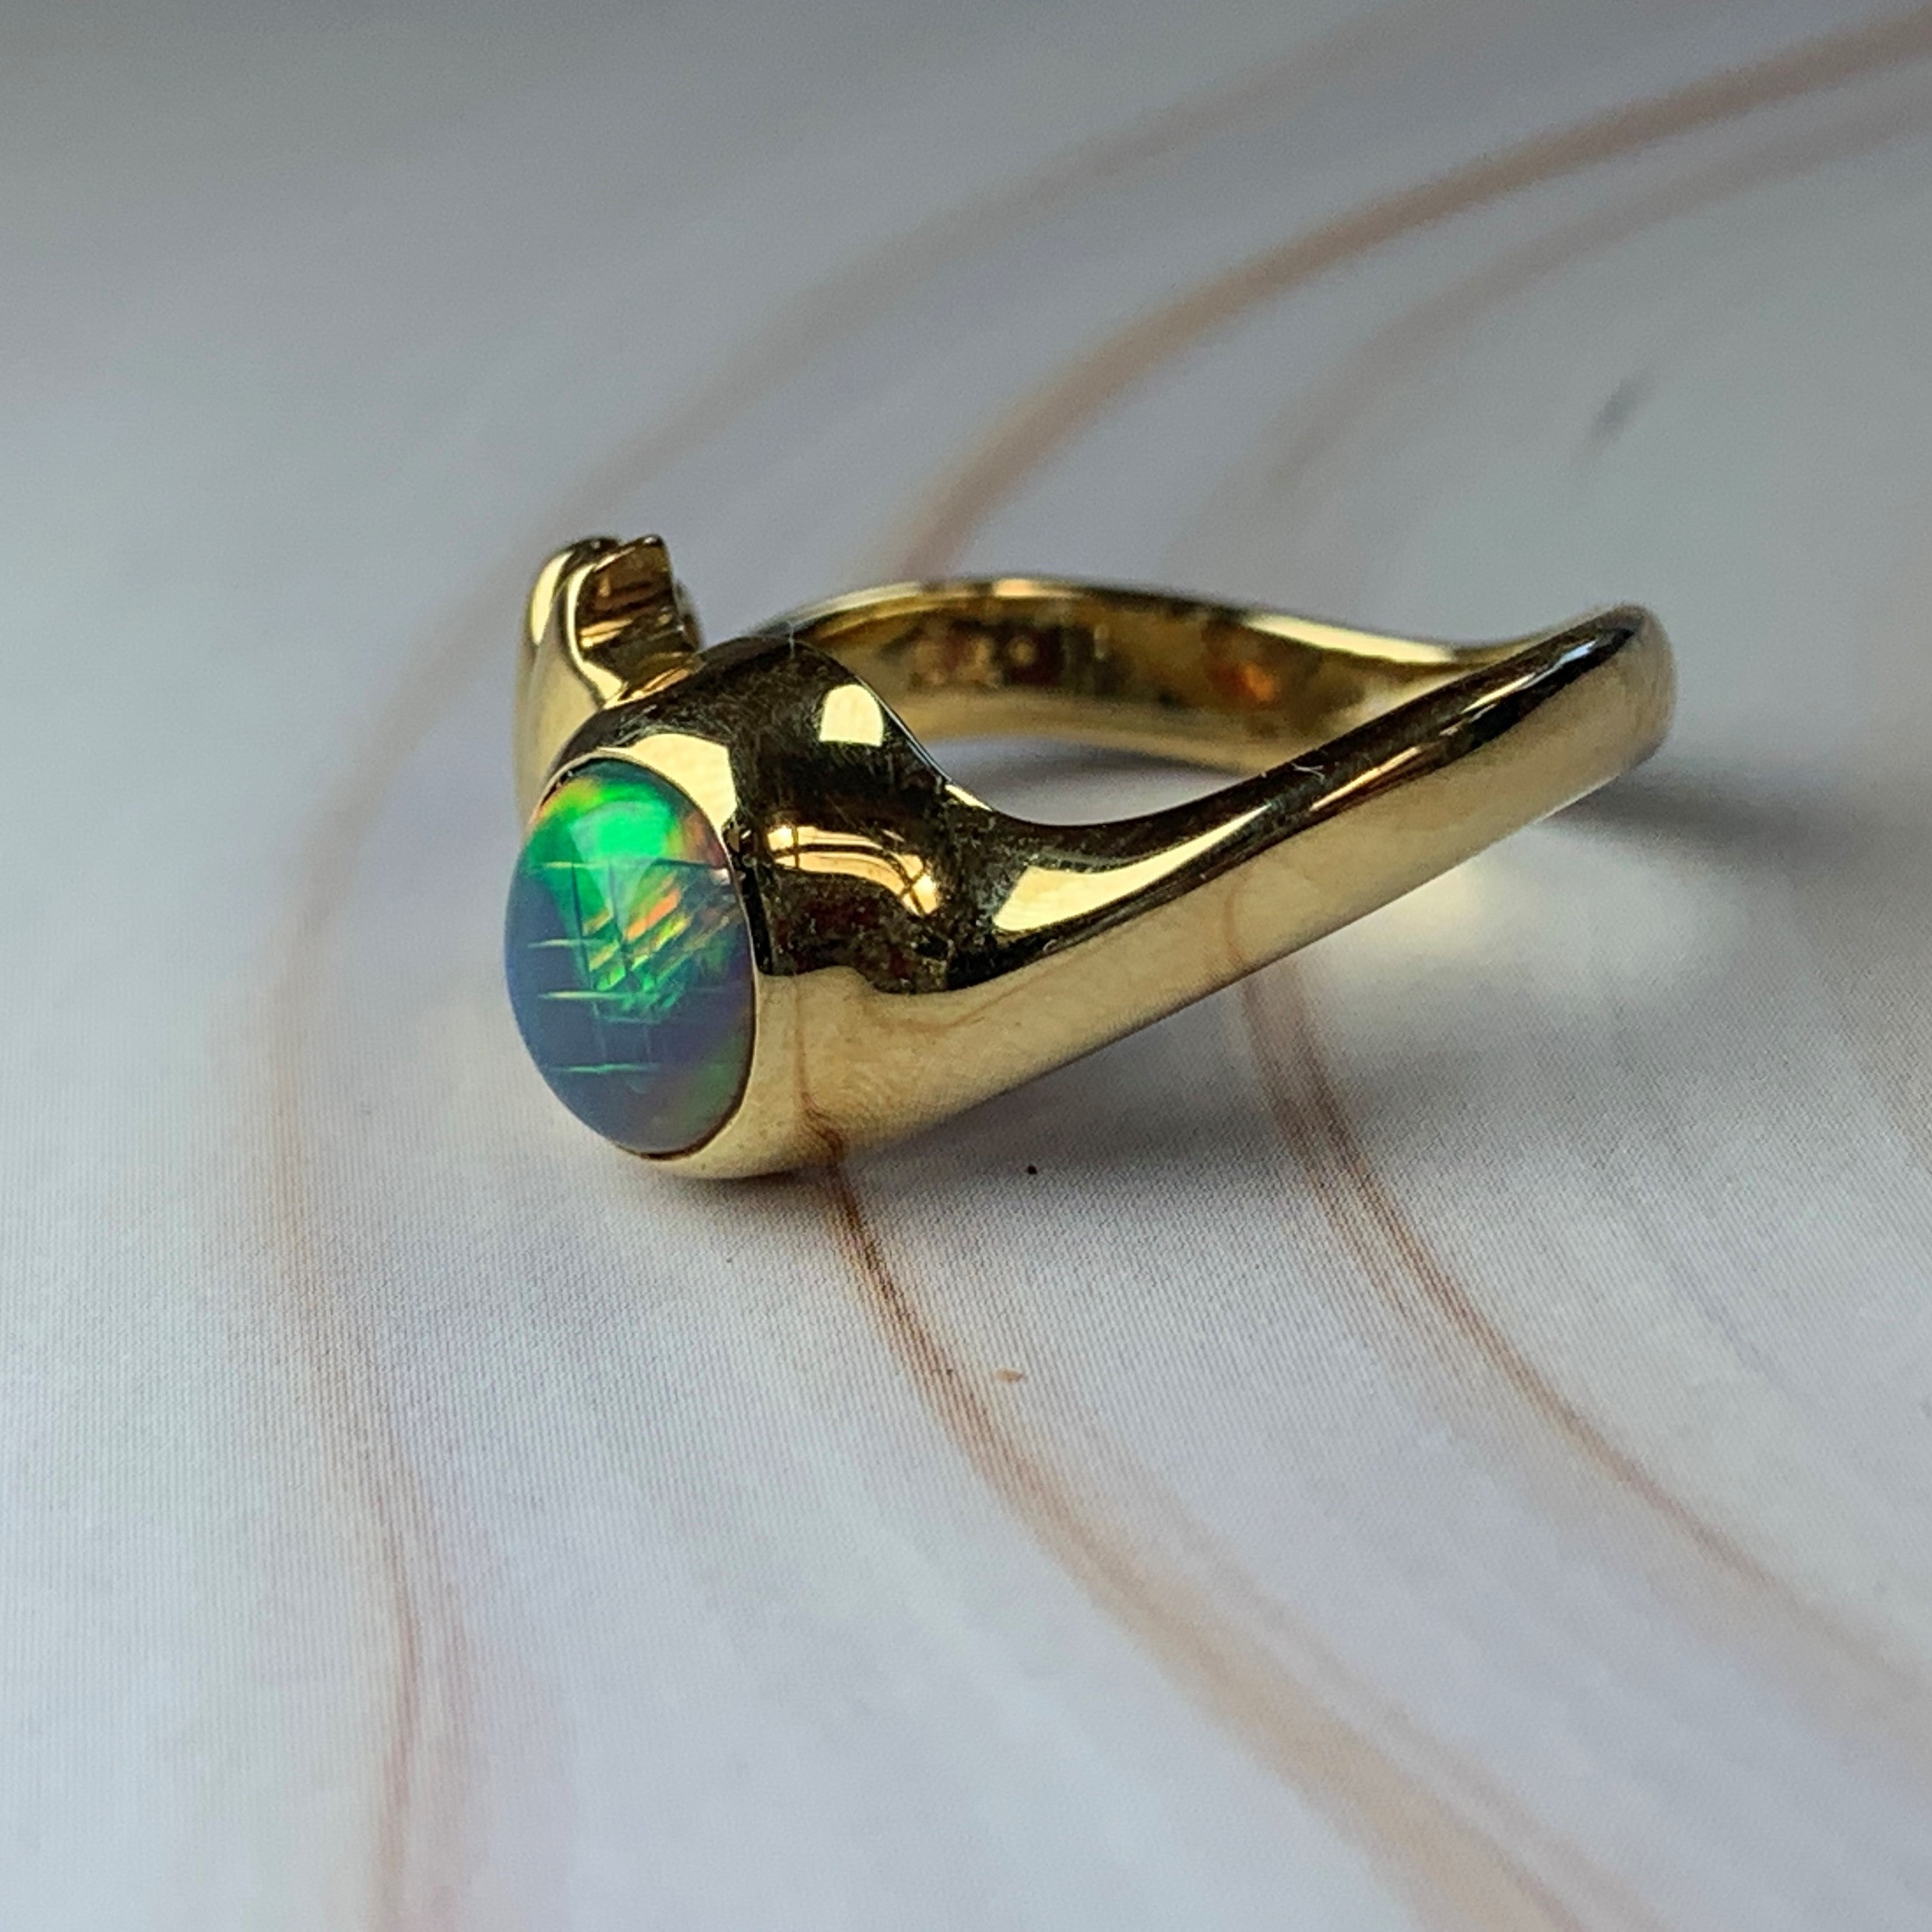 18kt Opera House design ring with Black Opal 0.9ct - Masterpiece Jewellery Opal & Gems Sydney Australia | Online Shop